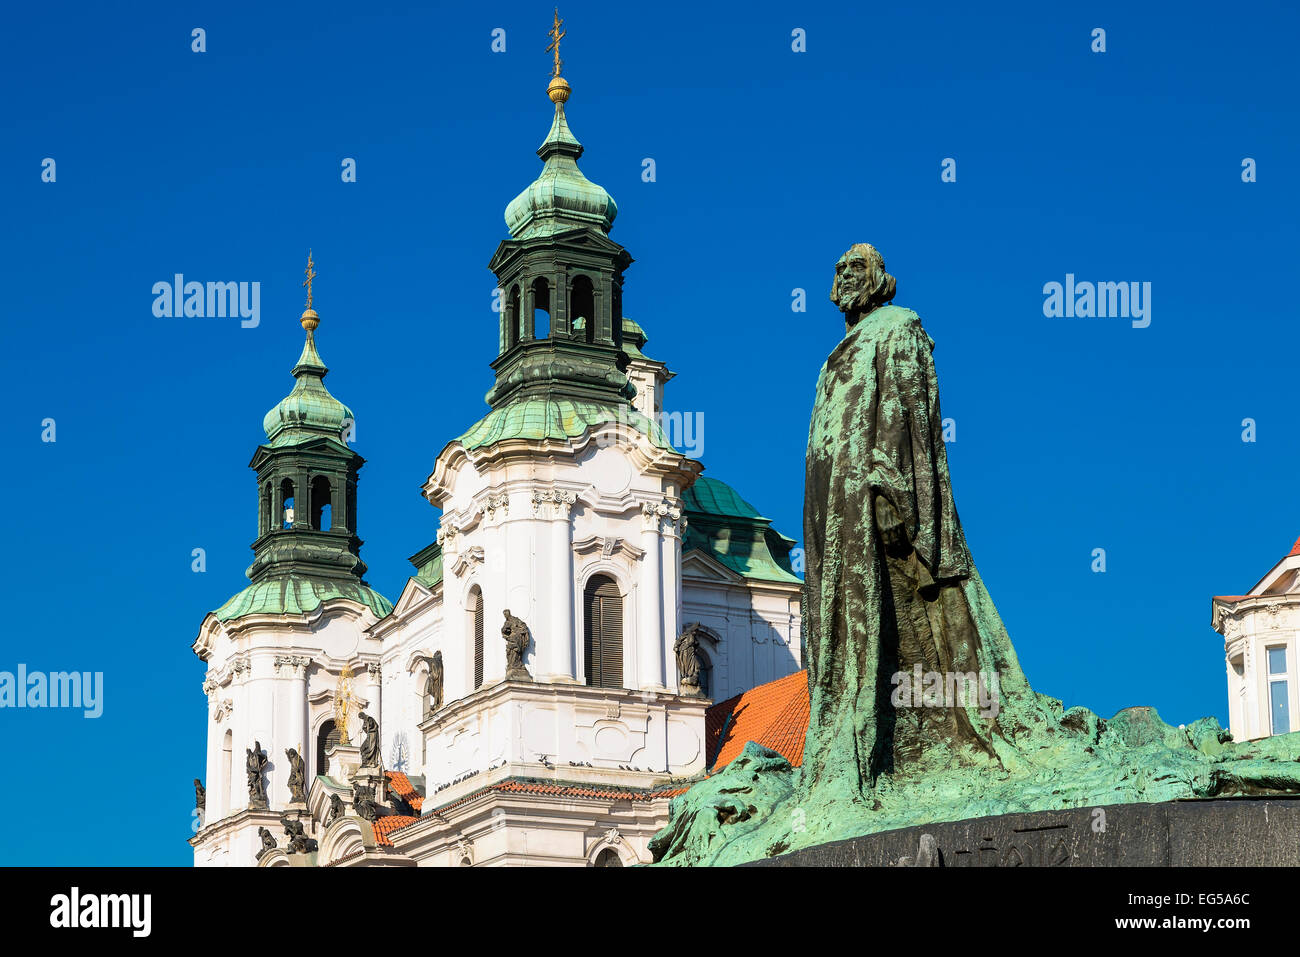 Jan Hus Monument, Staromestke Square, Prague, CZE Banque D'Images